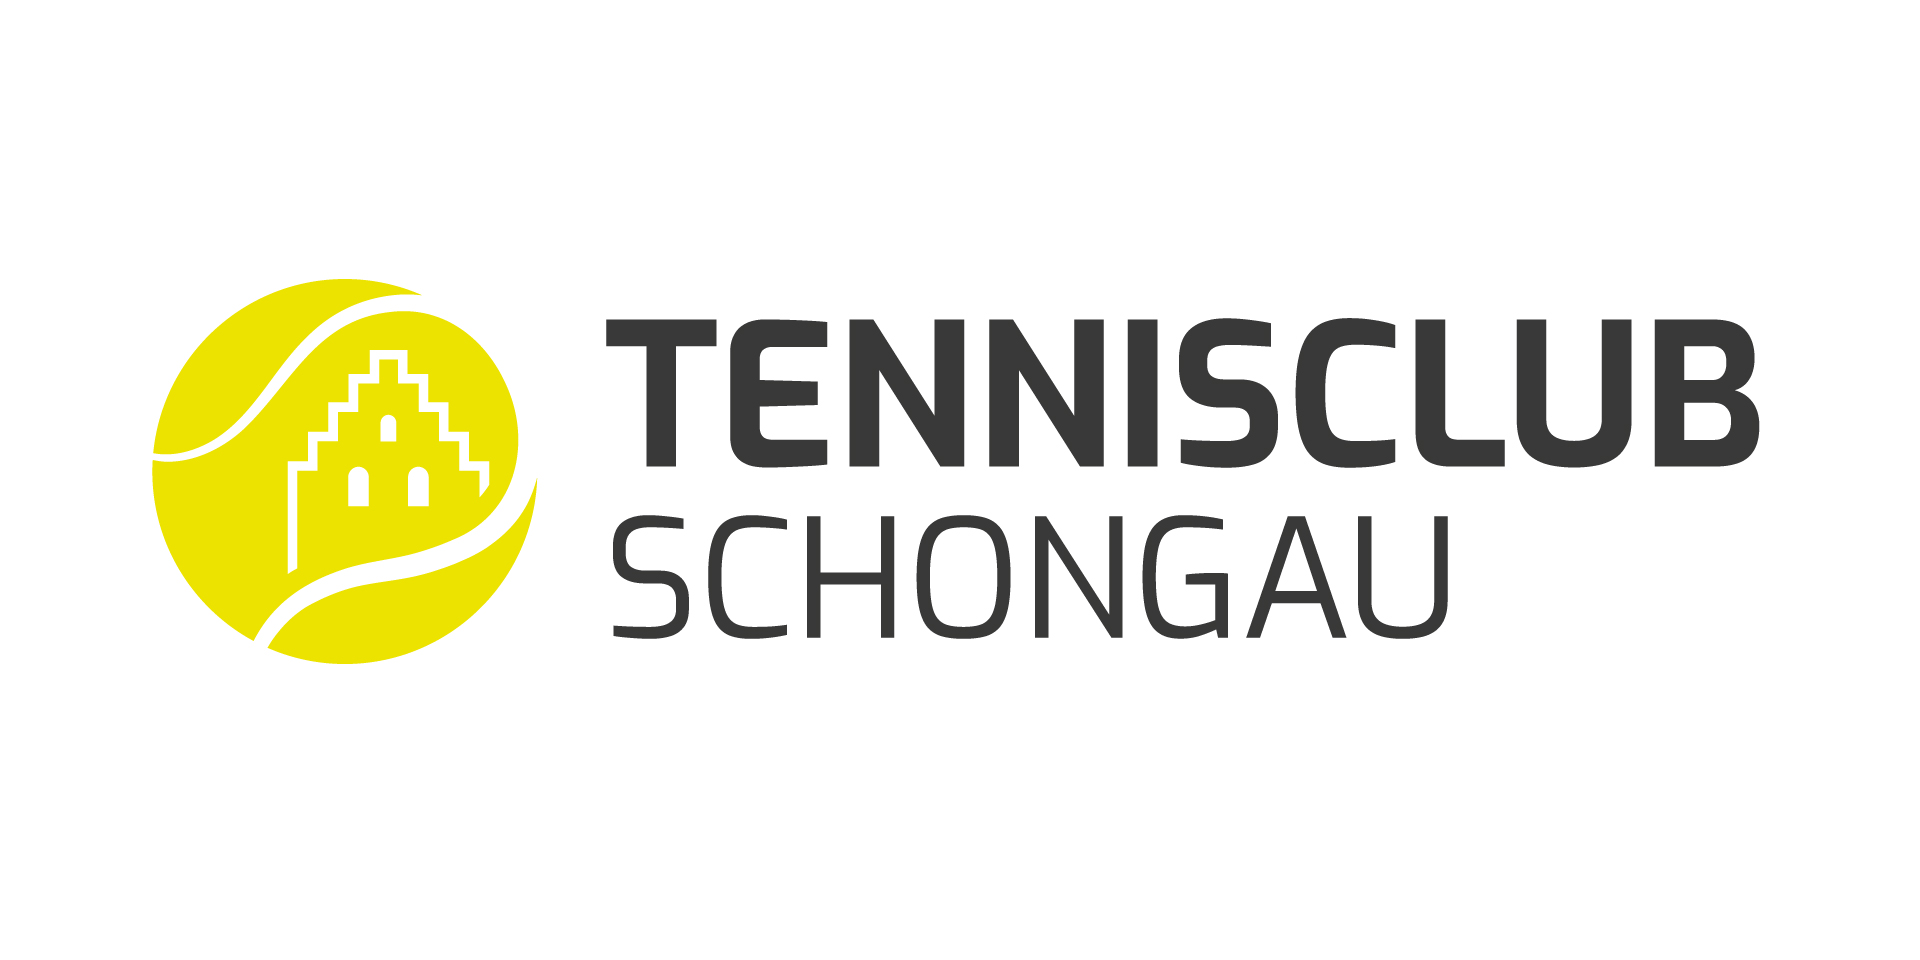 Tennisclub Schongau